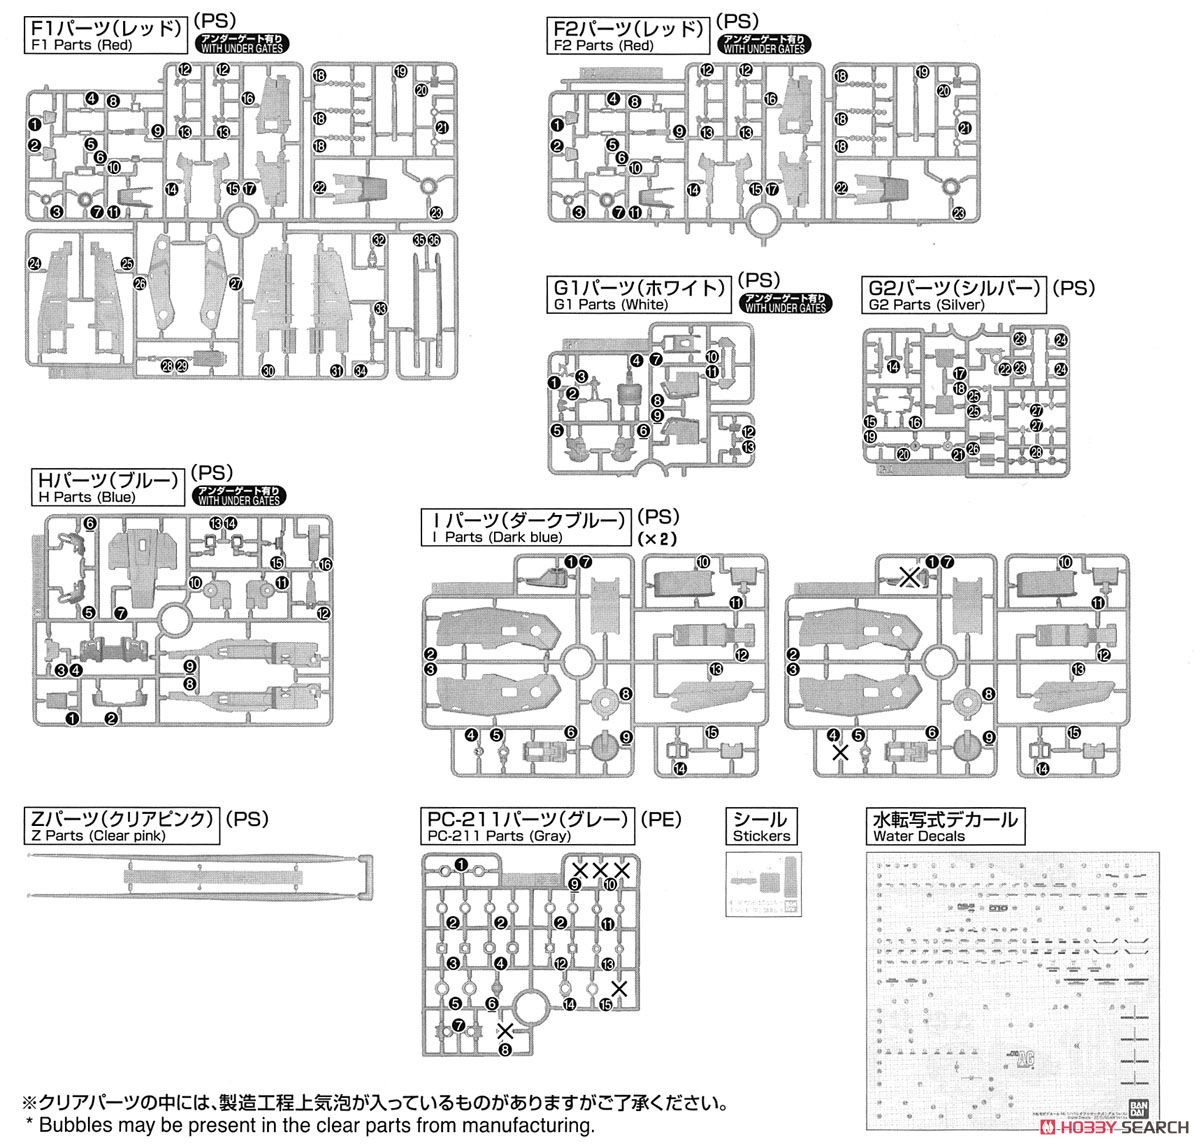 MSZ-010 ダブルゼータガンダム Ver.Ka (MG) (ガンプラ) 設計図19